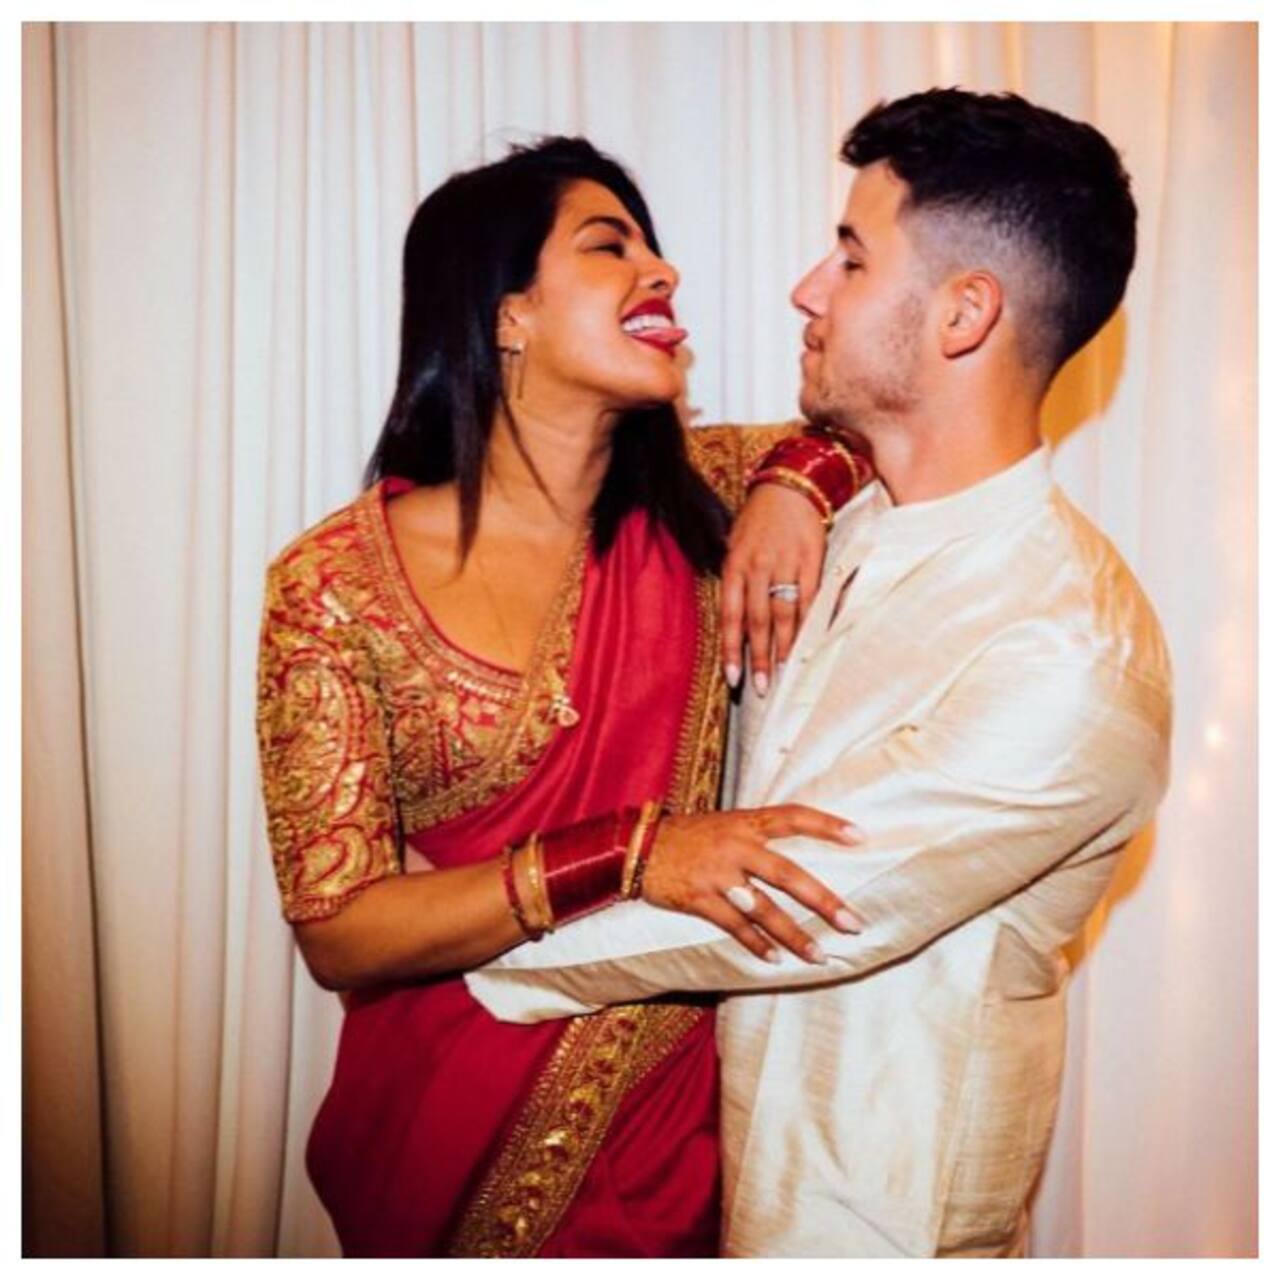 Nick Jonas had the most fun on his first Karwa Chauth with Priyanka Chopra - view pics